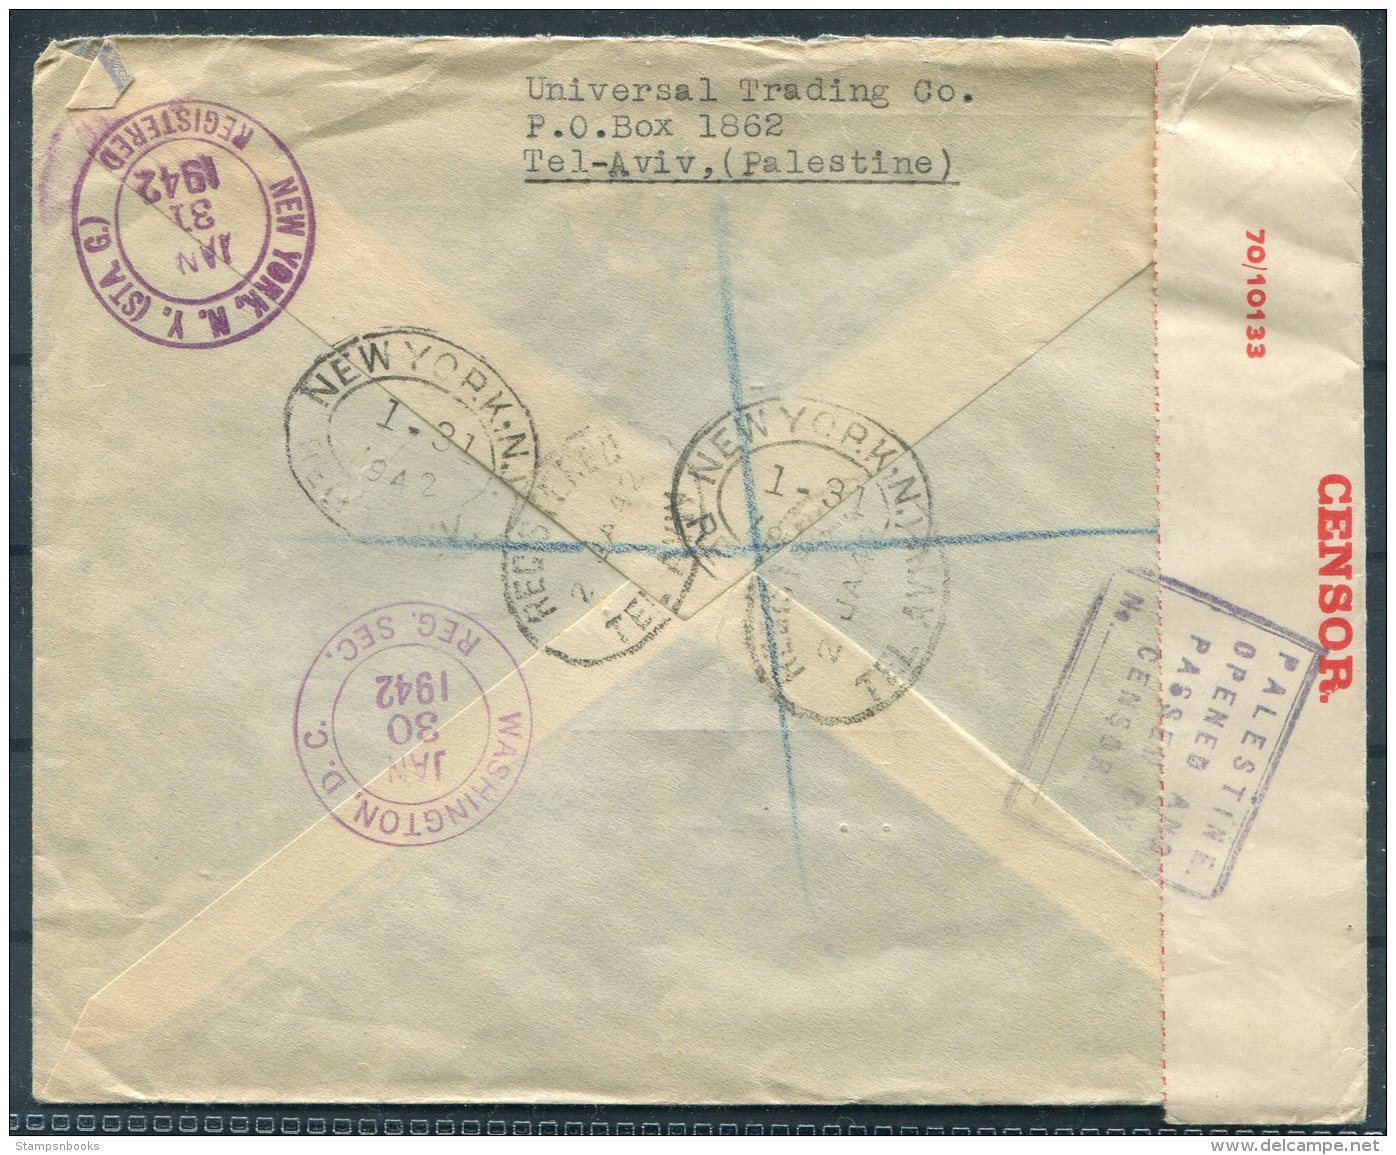 1942 Palestine Registered Censor Airmail Cover, Universal Trading Co.Tel Aviv - New York, USA - Palestine